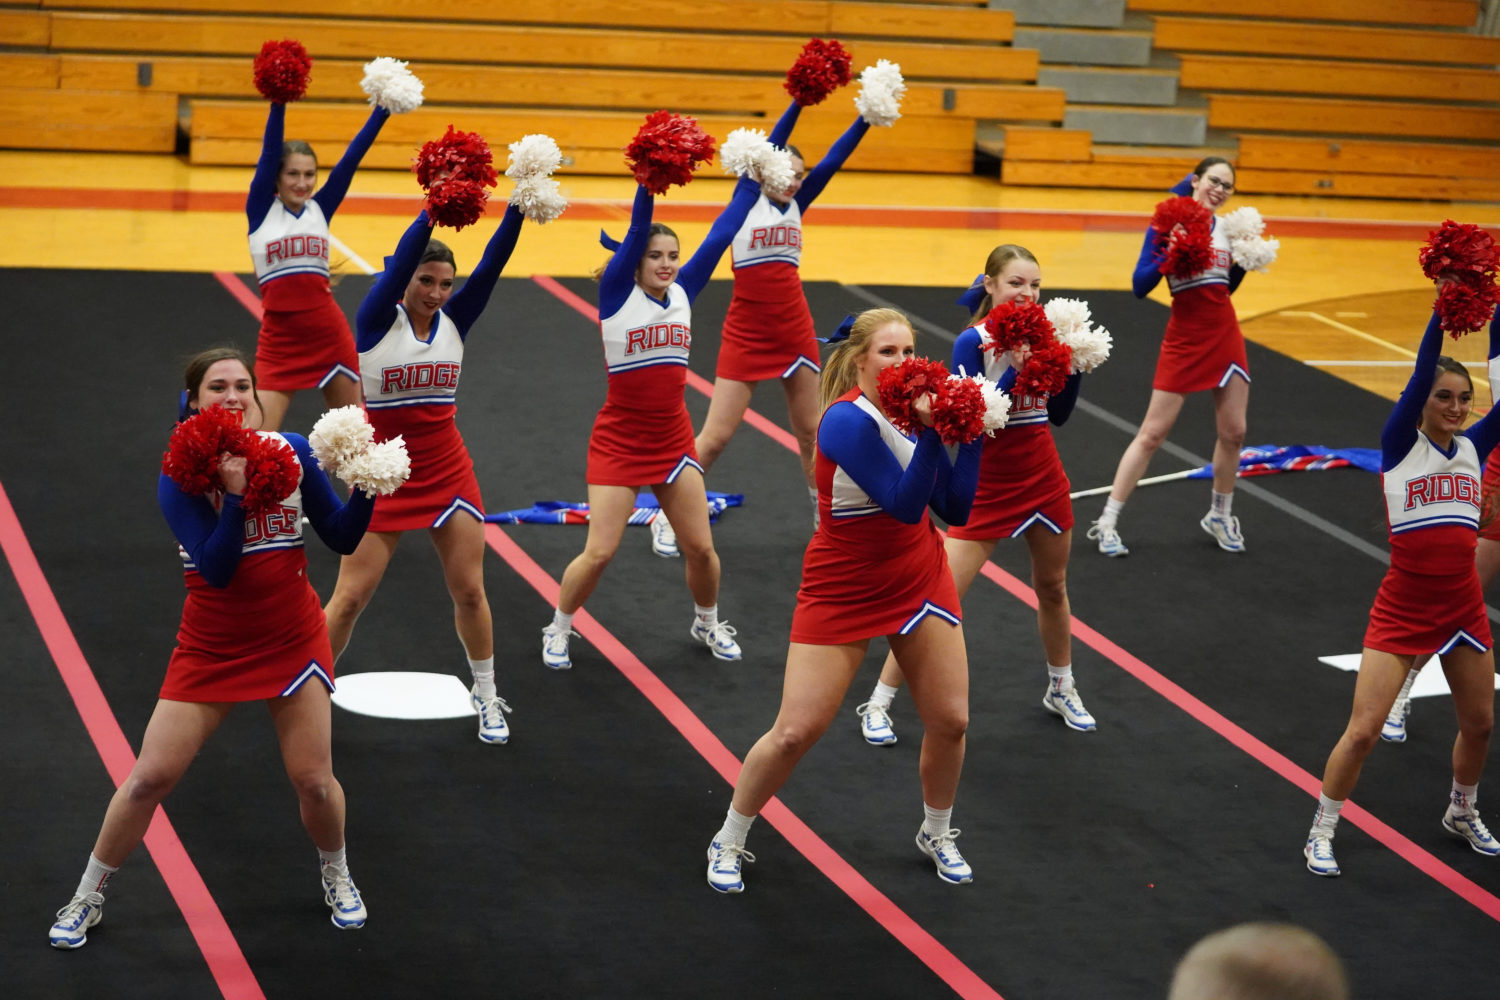 "cheerleaders perform in a gymnasium"